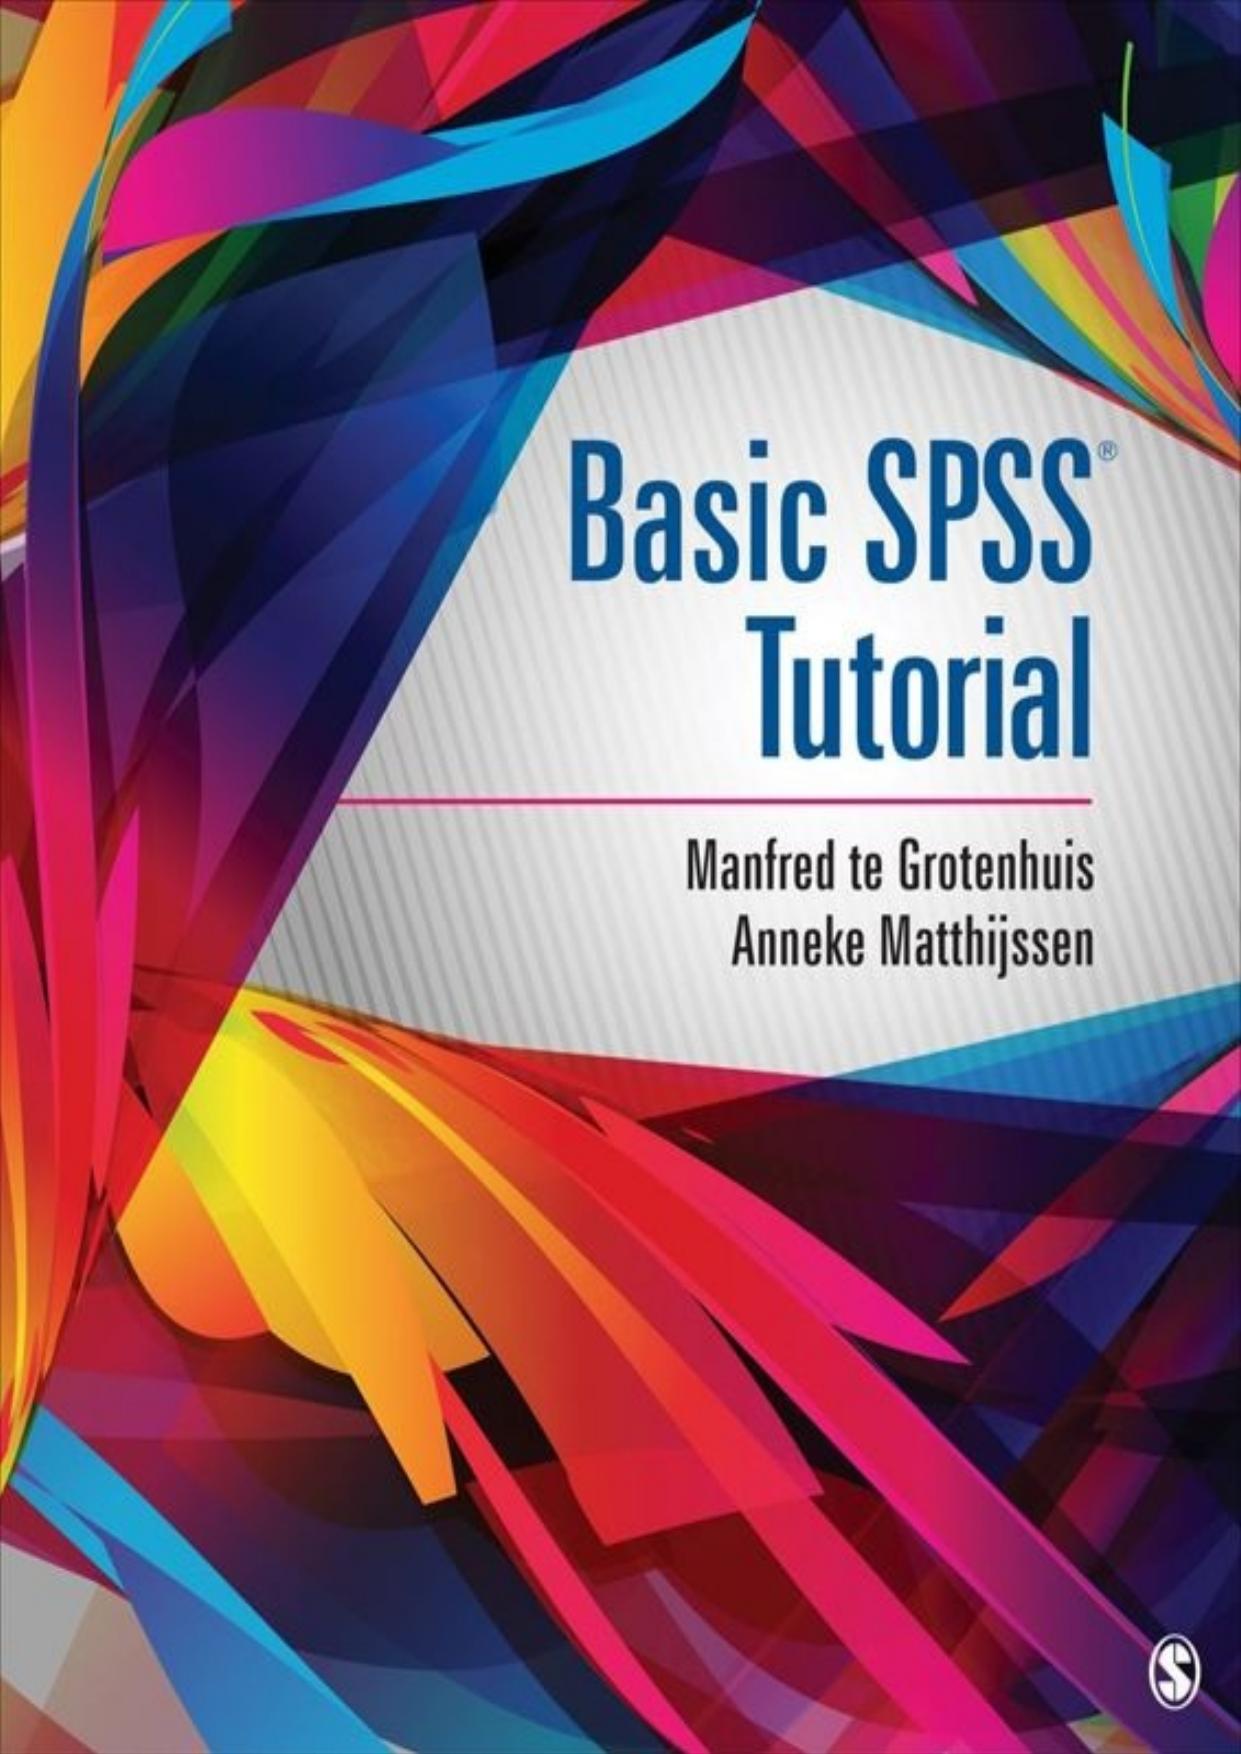 Basic SPSS Tutorial by Manfred te Grotenhuis & Anneke Matthijssen